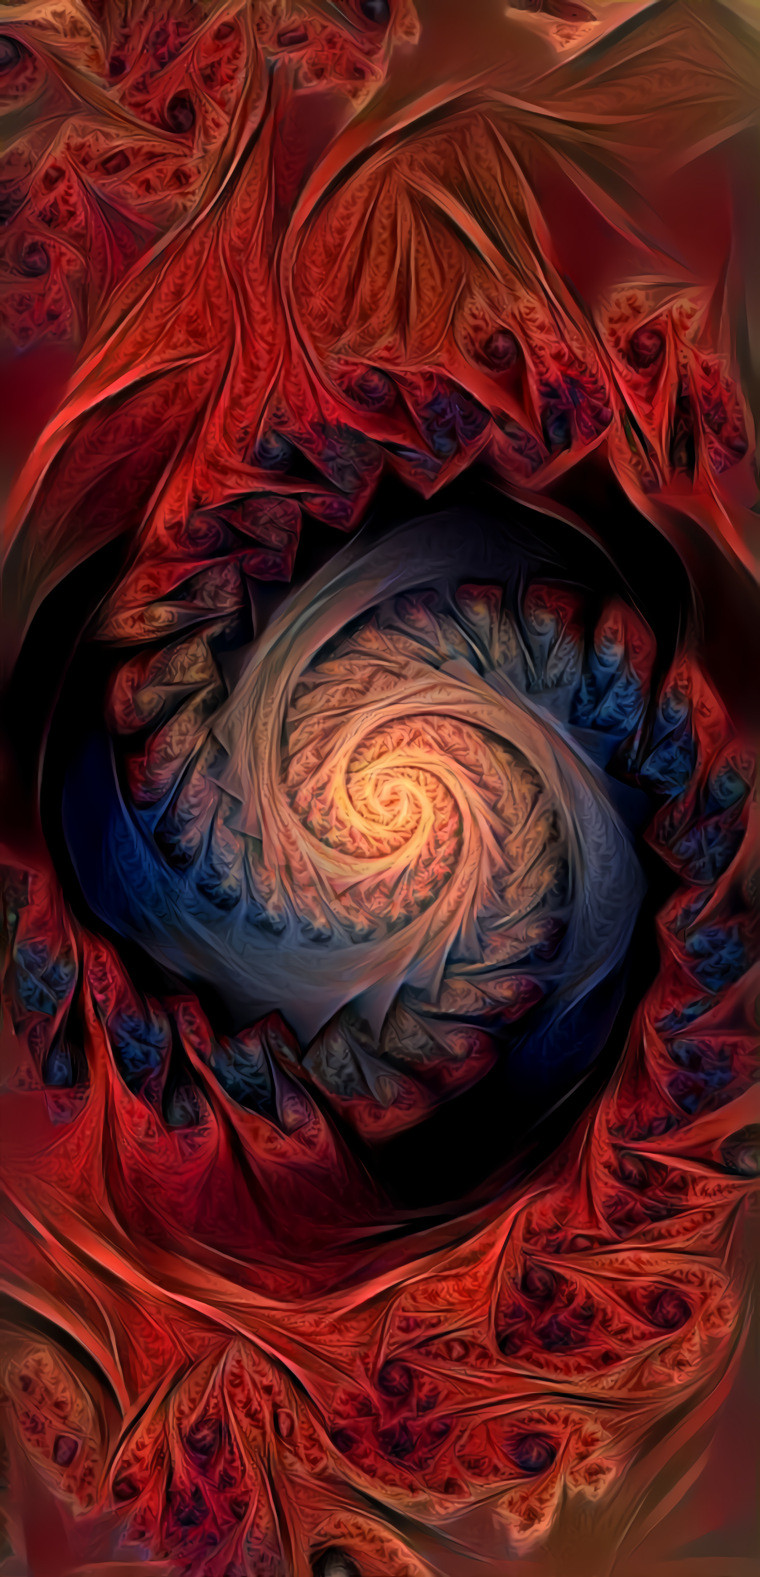 Red Spiral